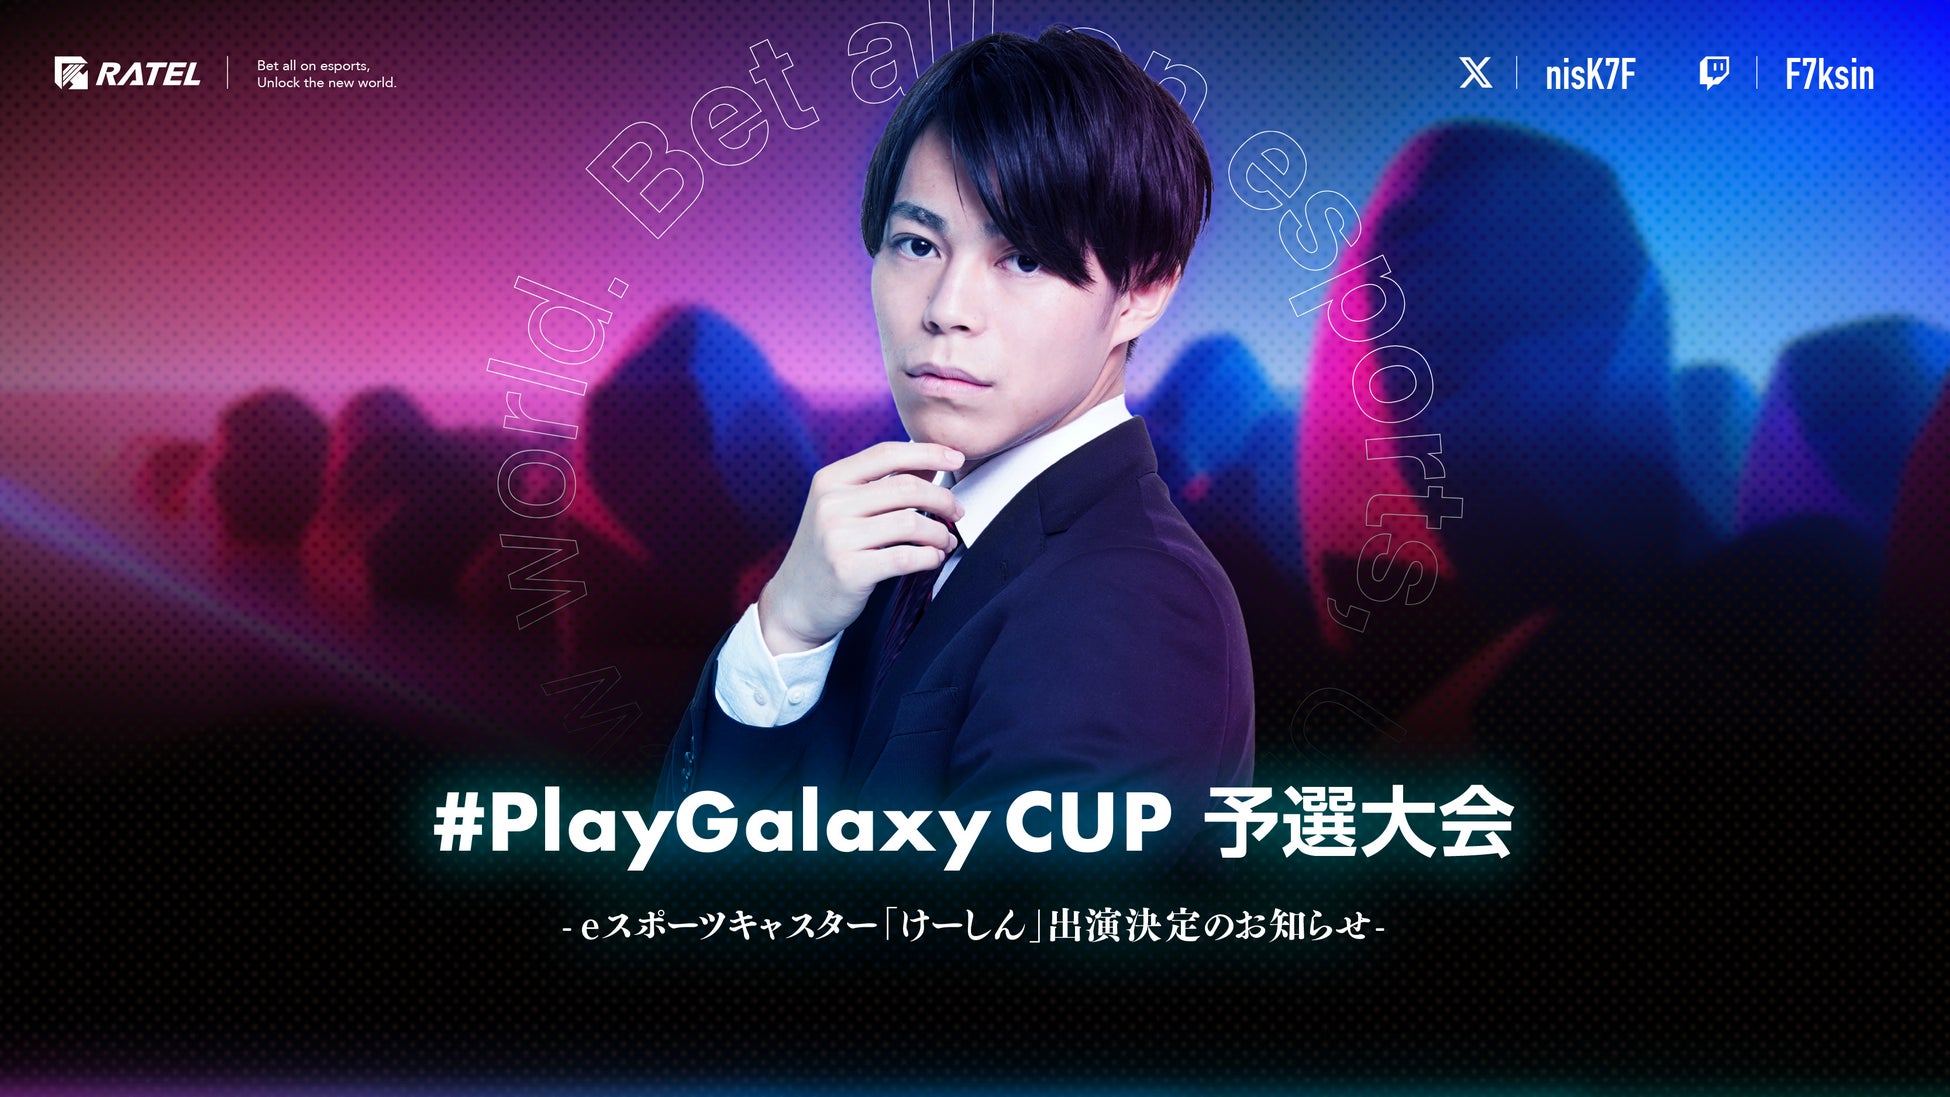 eスポーツキャスター「けーしん」がSamsung Galaxy主催のeスポーツ大会 「#PlayGalaxy CUP ~Call of Duty®: Mobile~」の予選実況者として出演決定